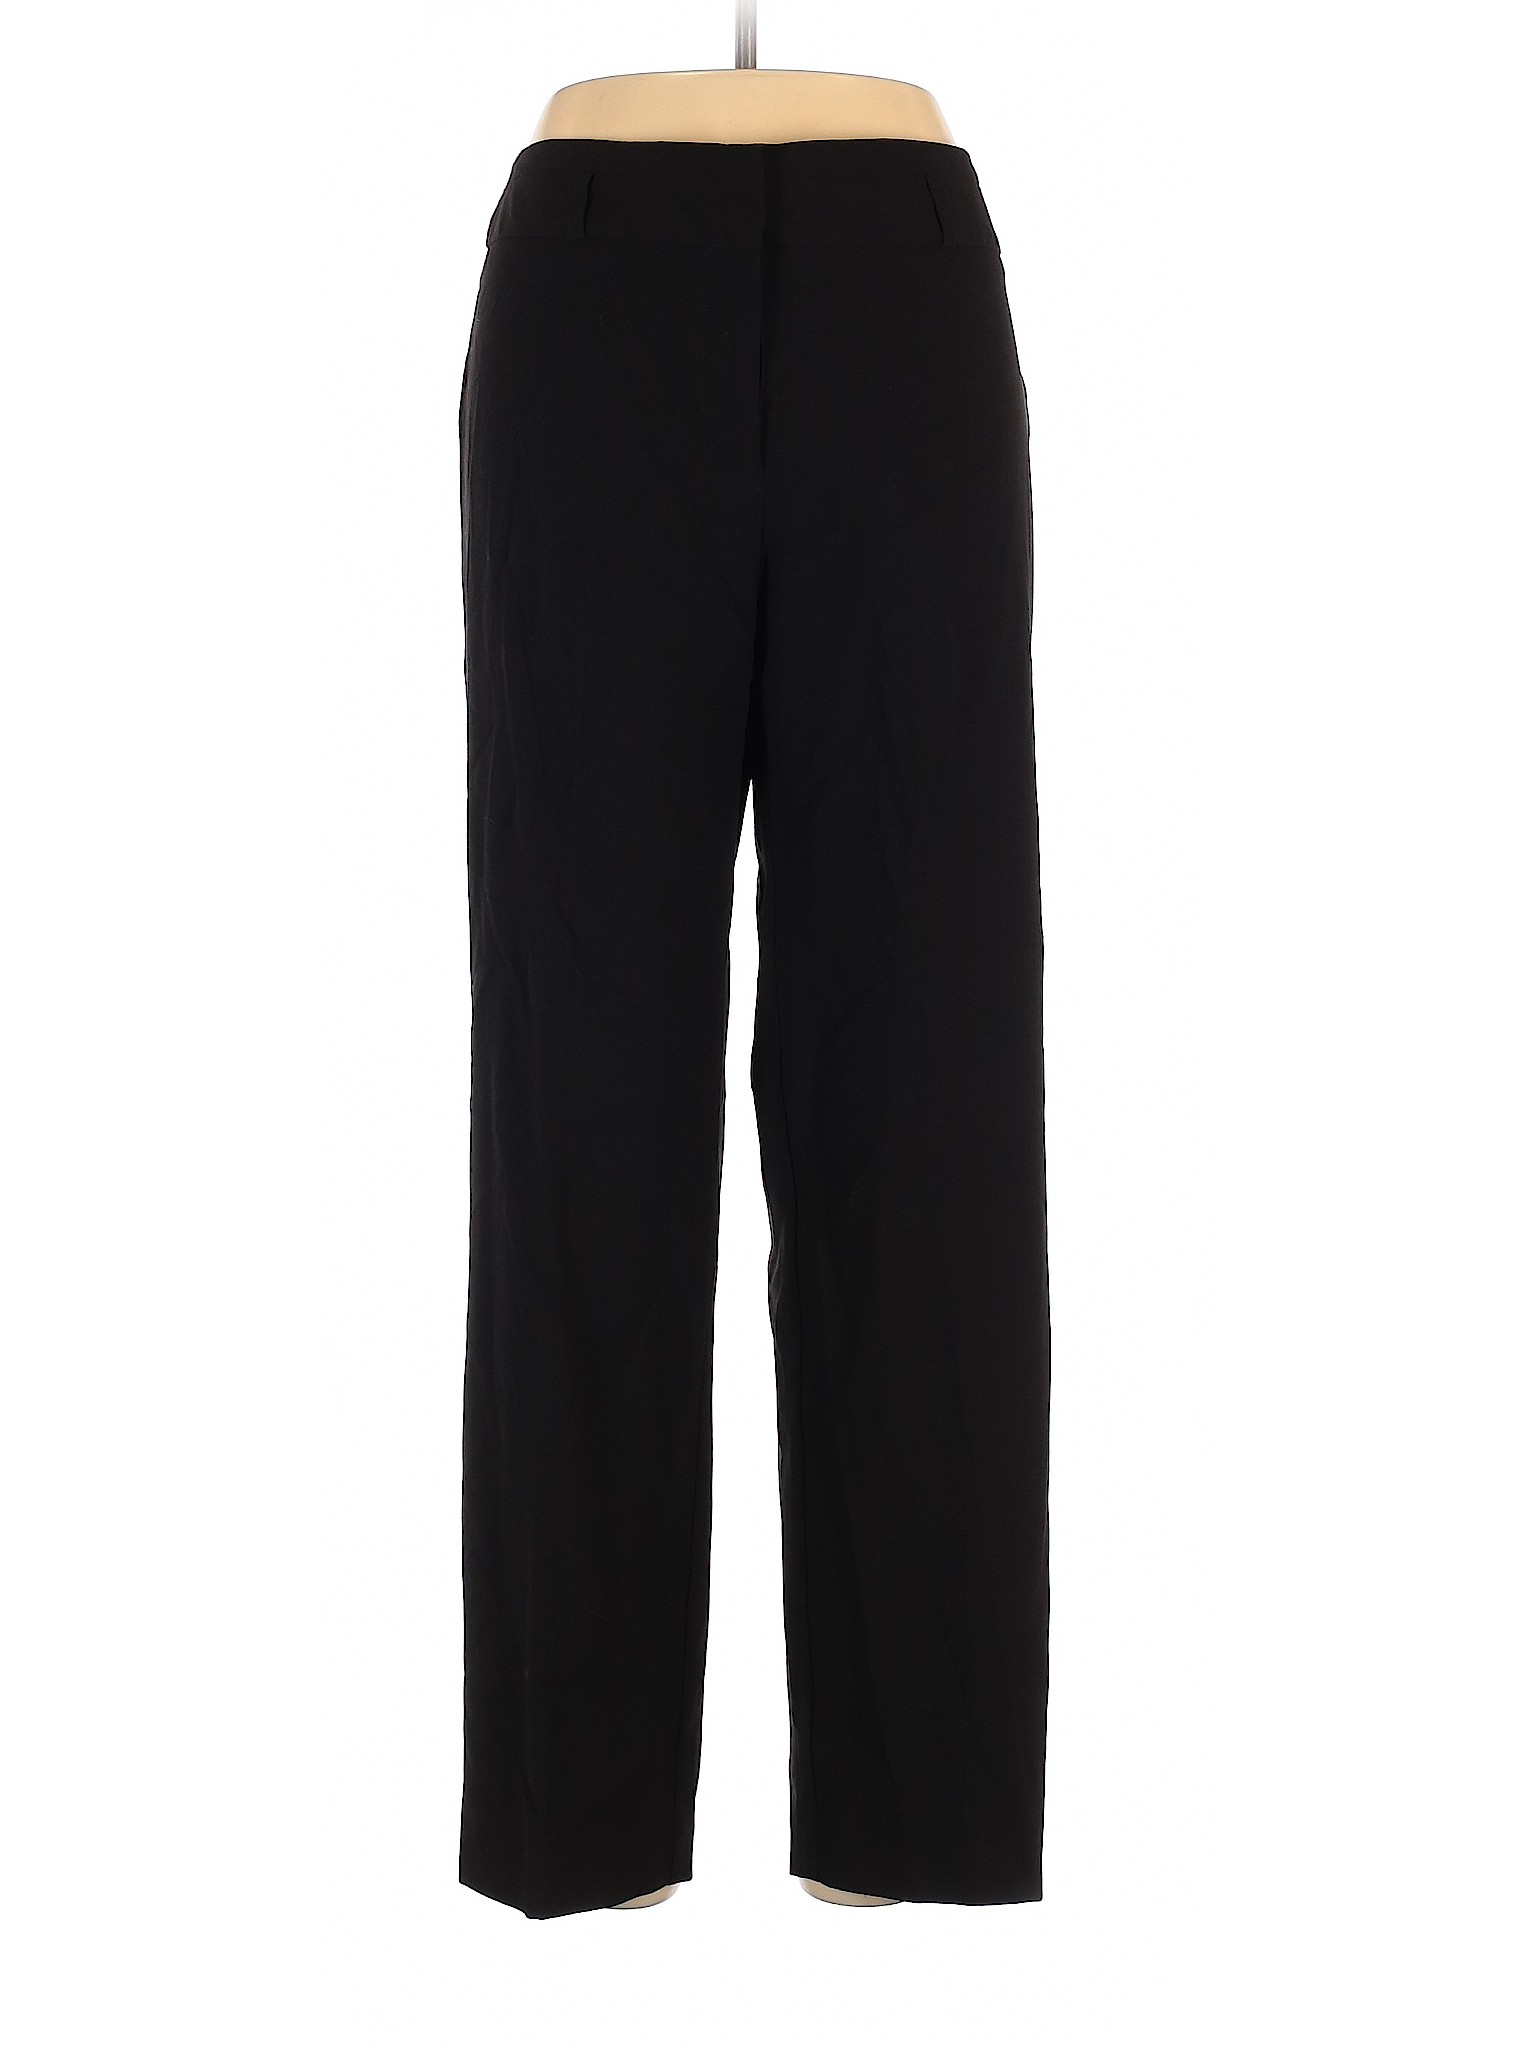 George Women Black Dress Pants 12 | eBay